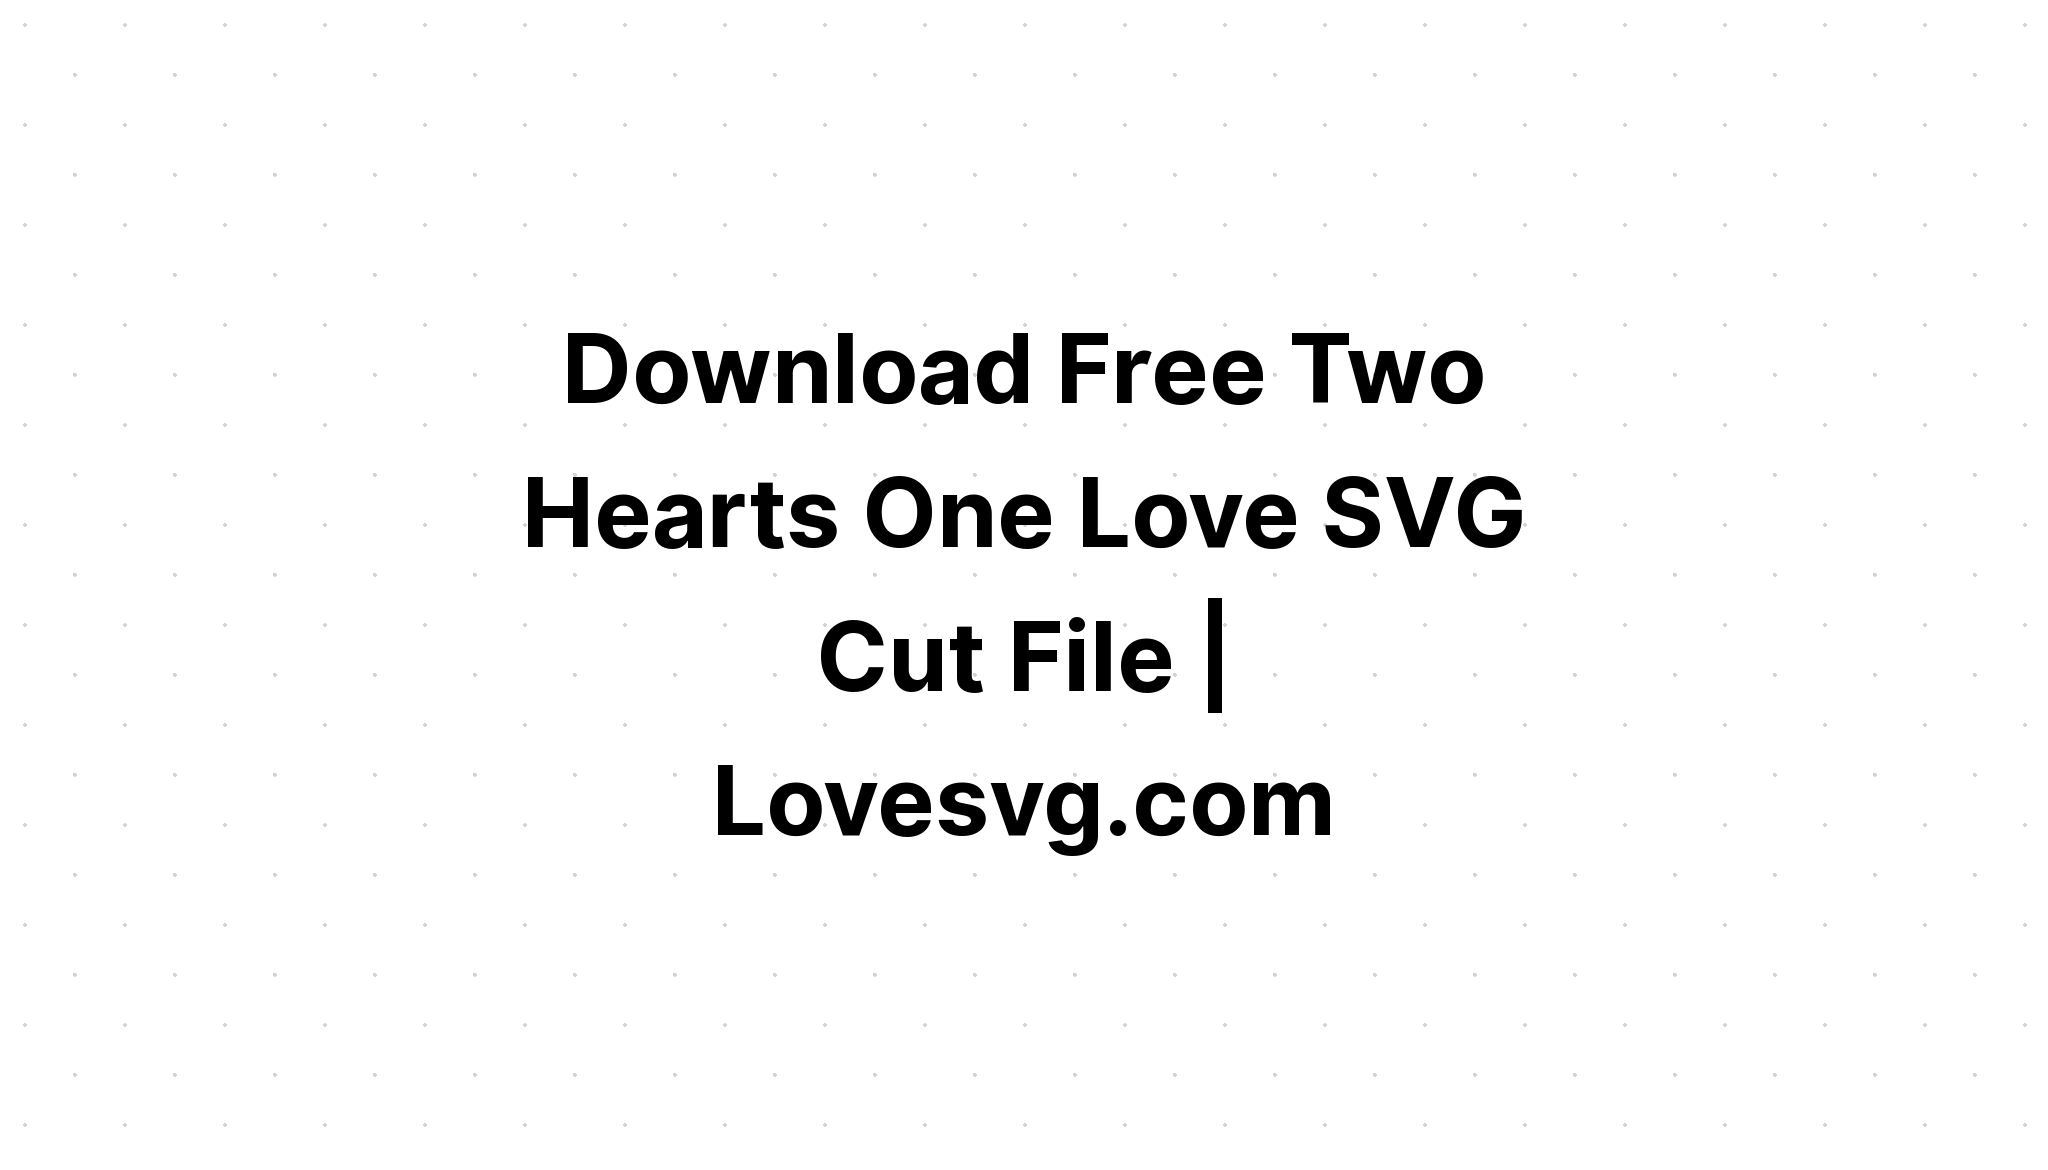 Download Free Svg Love.com - Layered SVG Cut File